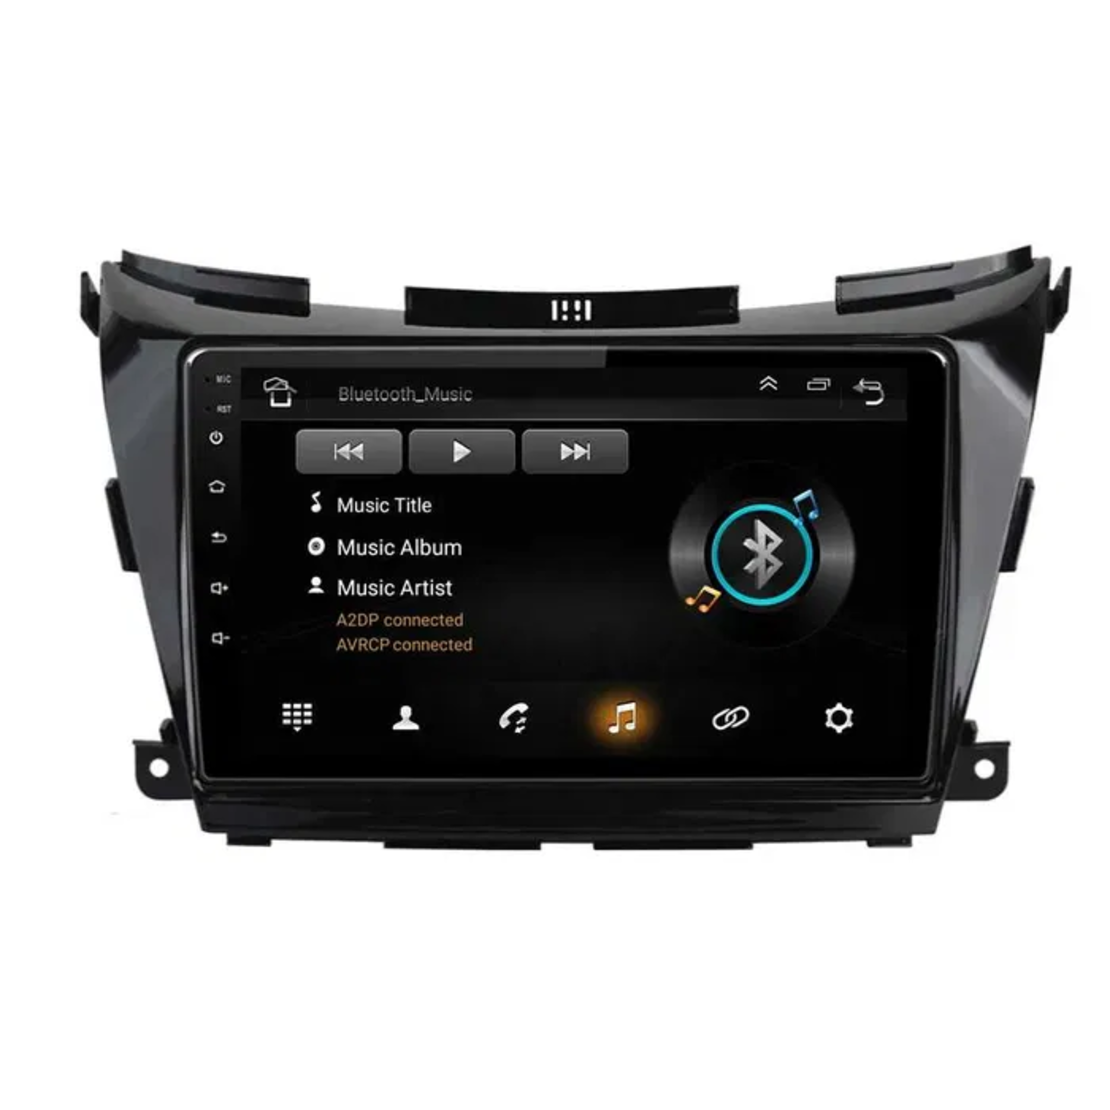 Nissan Murano 2015 - 2017 Android Multimedia/Navigation